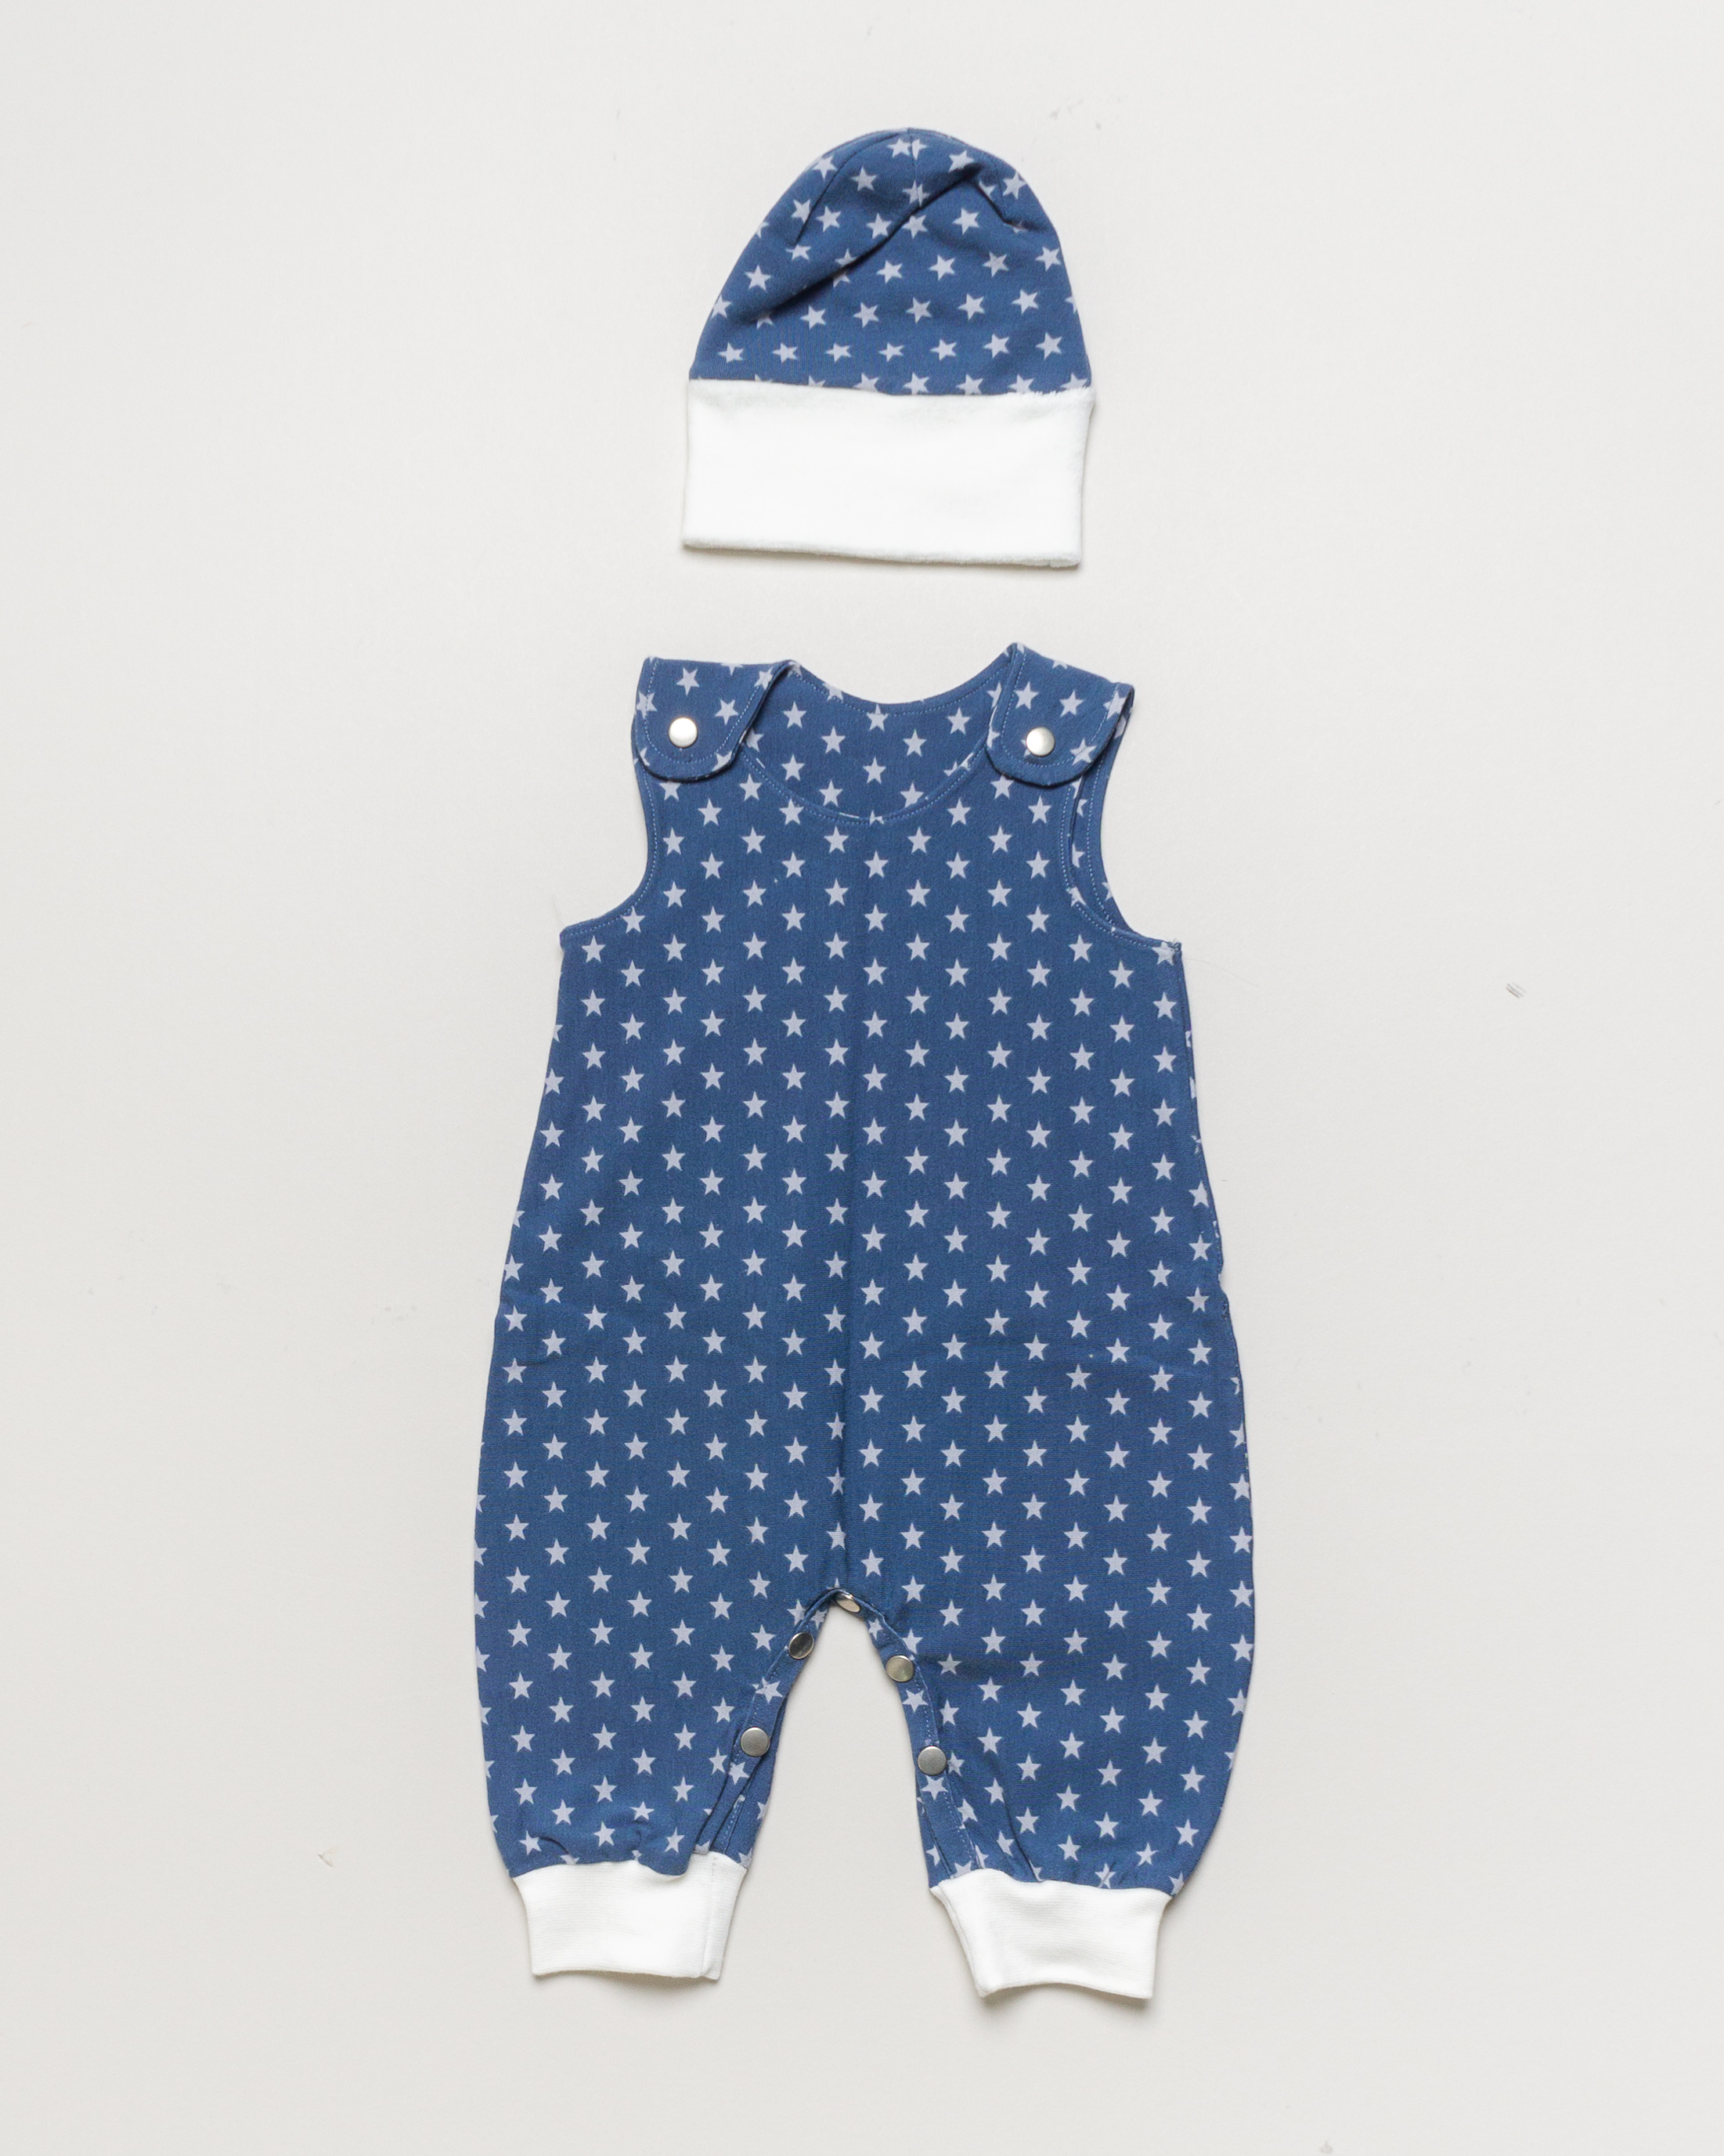 Outfit Gr. 56 - handmade Strampler Mütze blau weiß Sterne